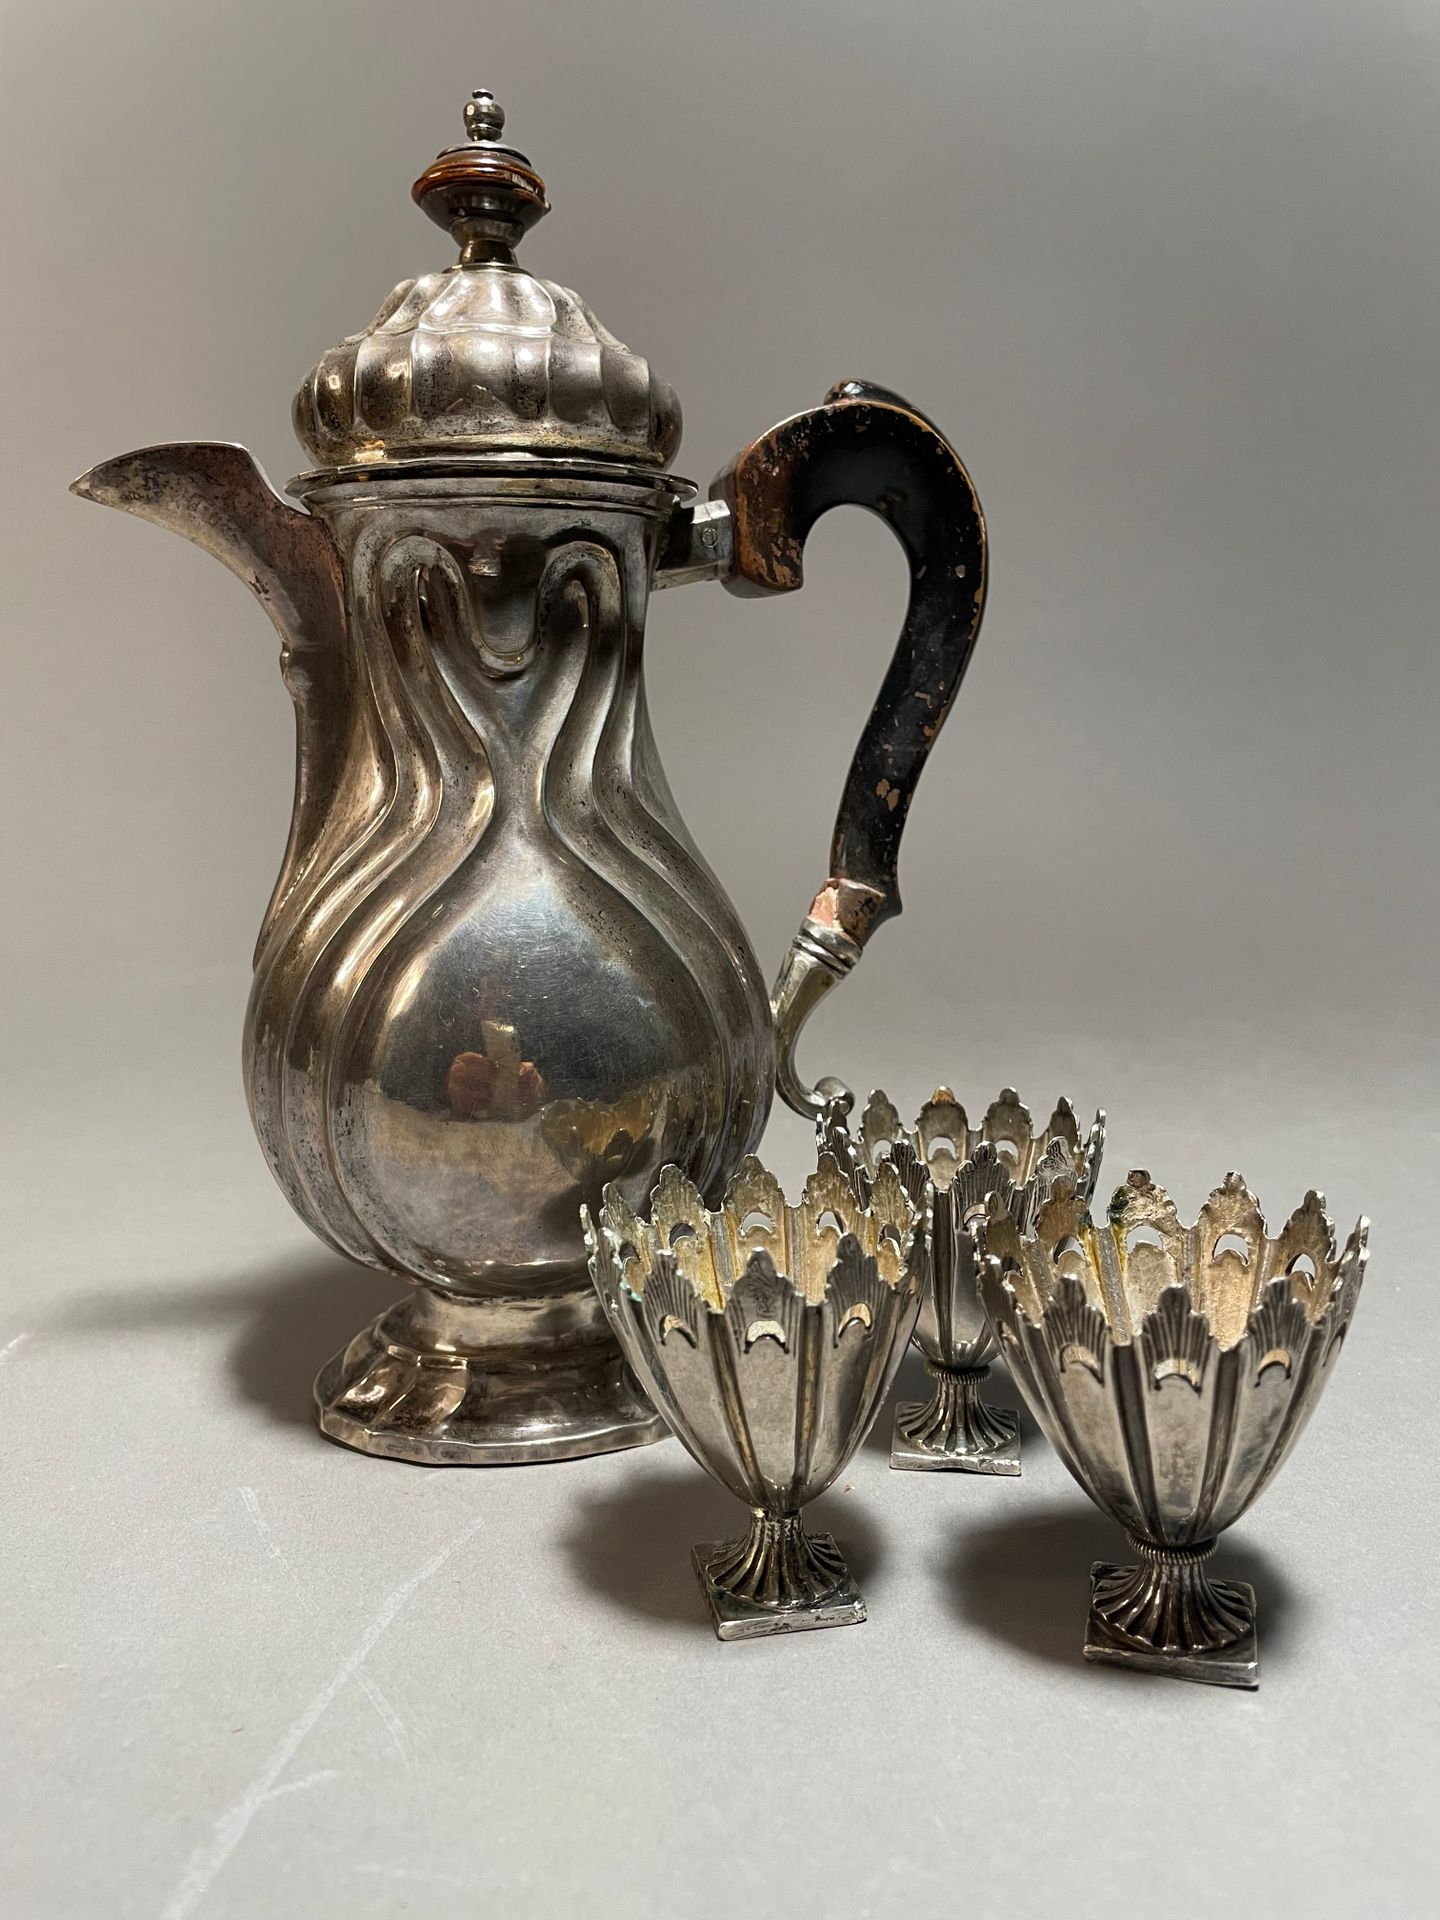 Null 银质咖啡壶
有弯曲的形状和出水口
发黑的木柄
可能是奥斯曼人的作品
附有三个小蛋杯
PB : 440克